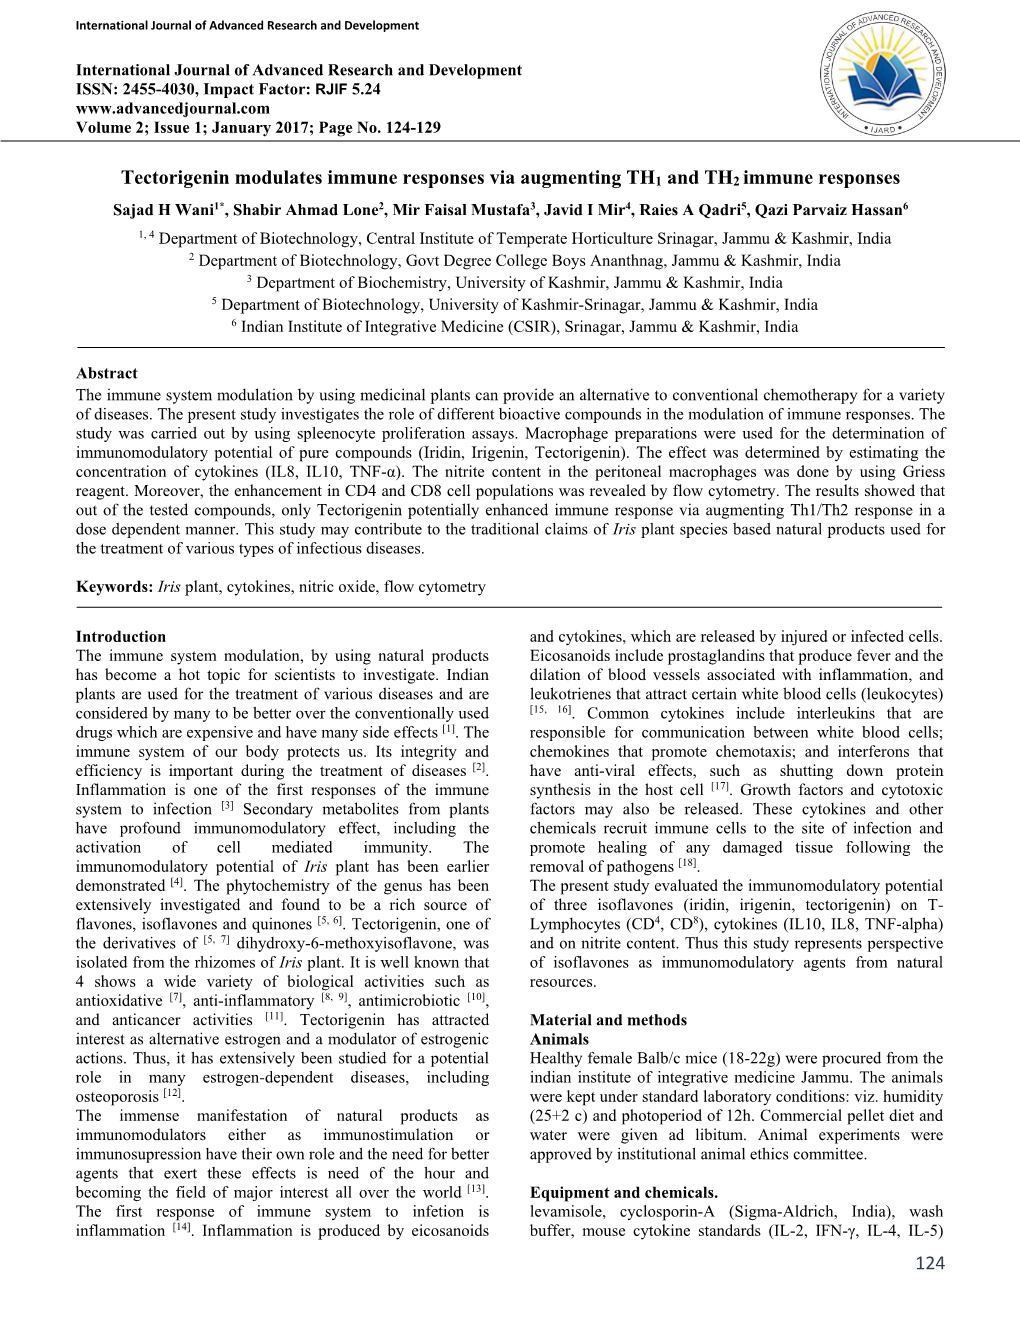 124 Tectorigenin Modulates Immune Responses Via Augmenting TH1 And